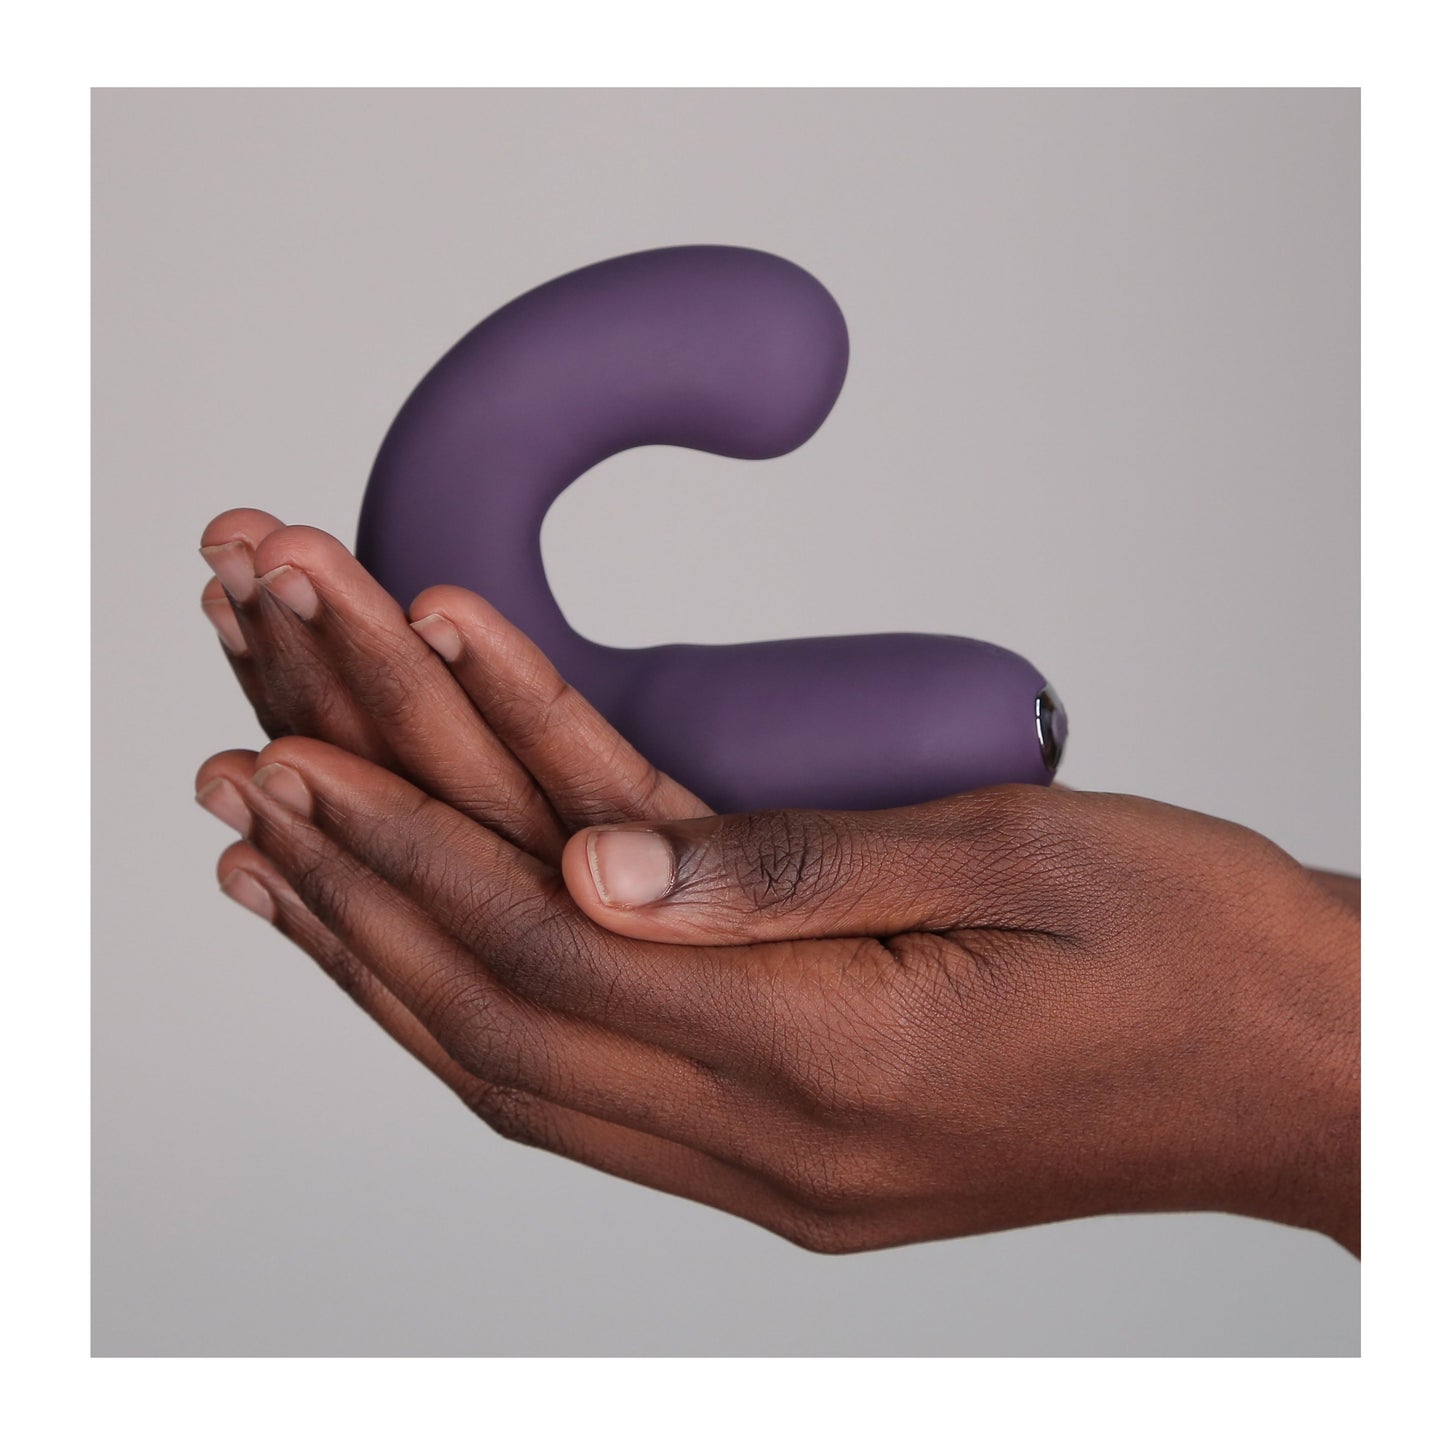 Hands holding G Kii Vibrator in purple 